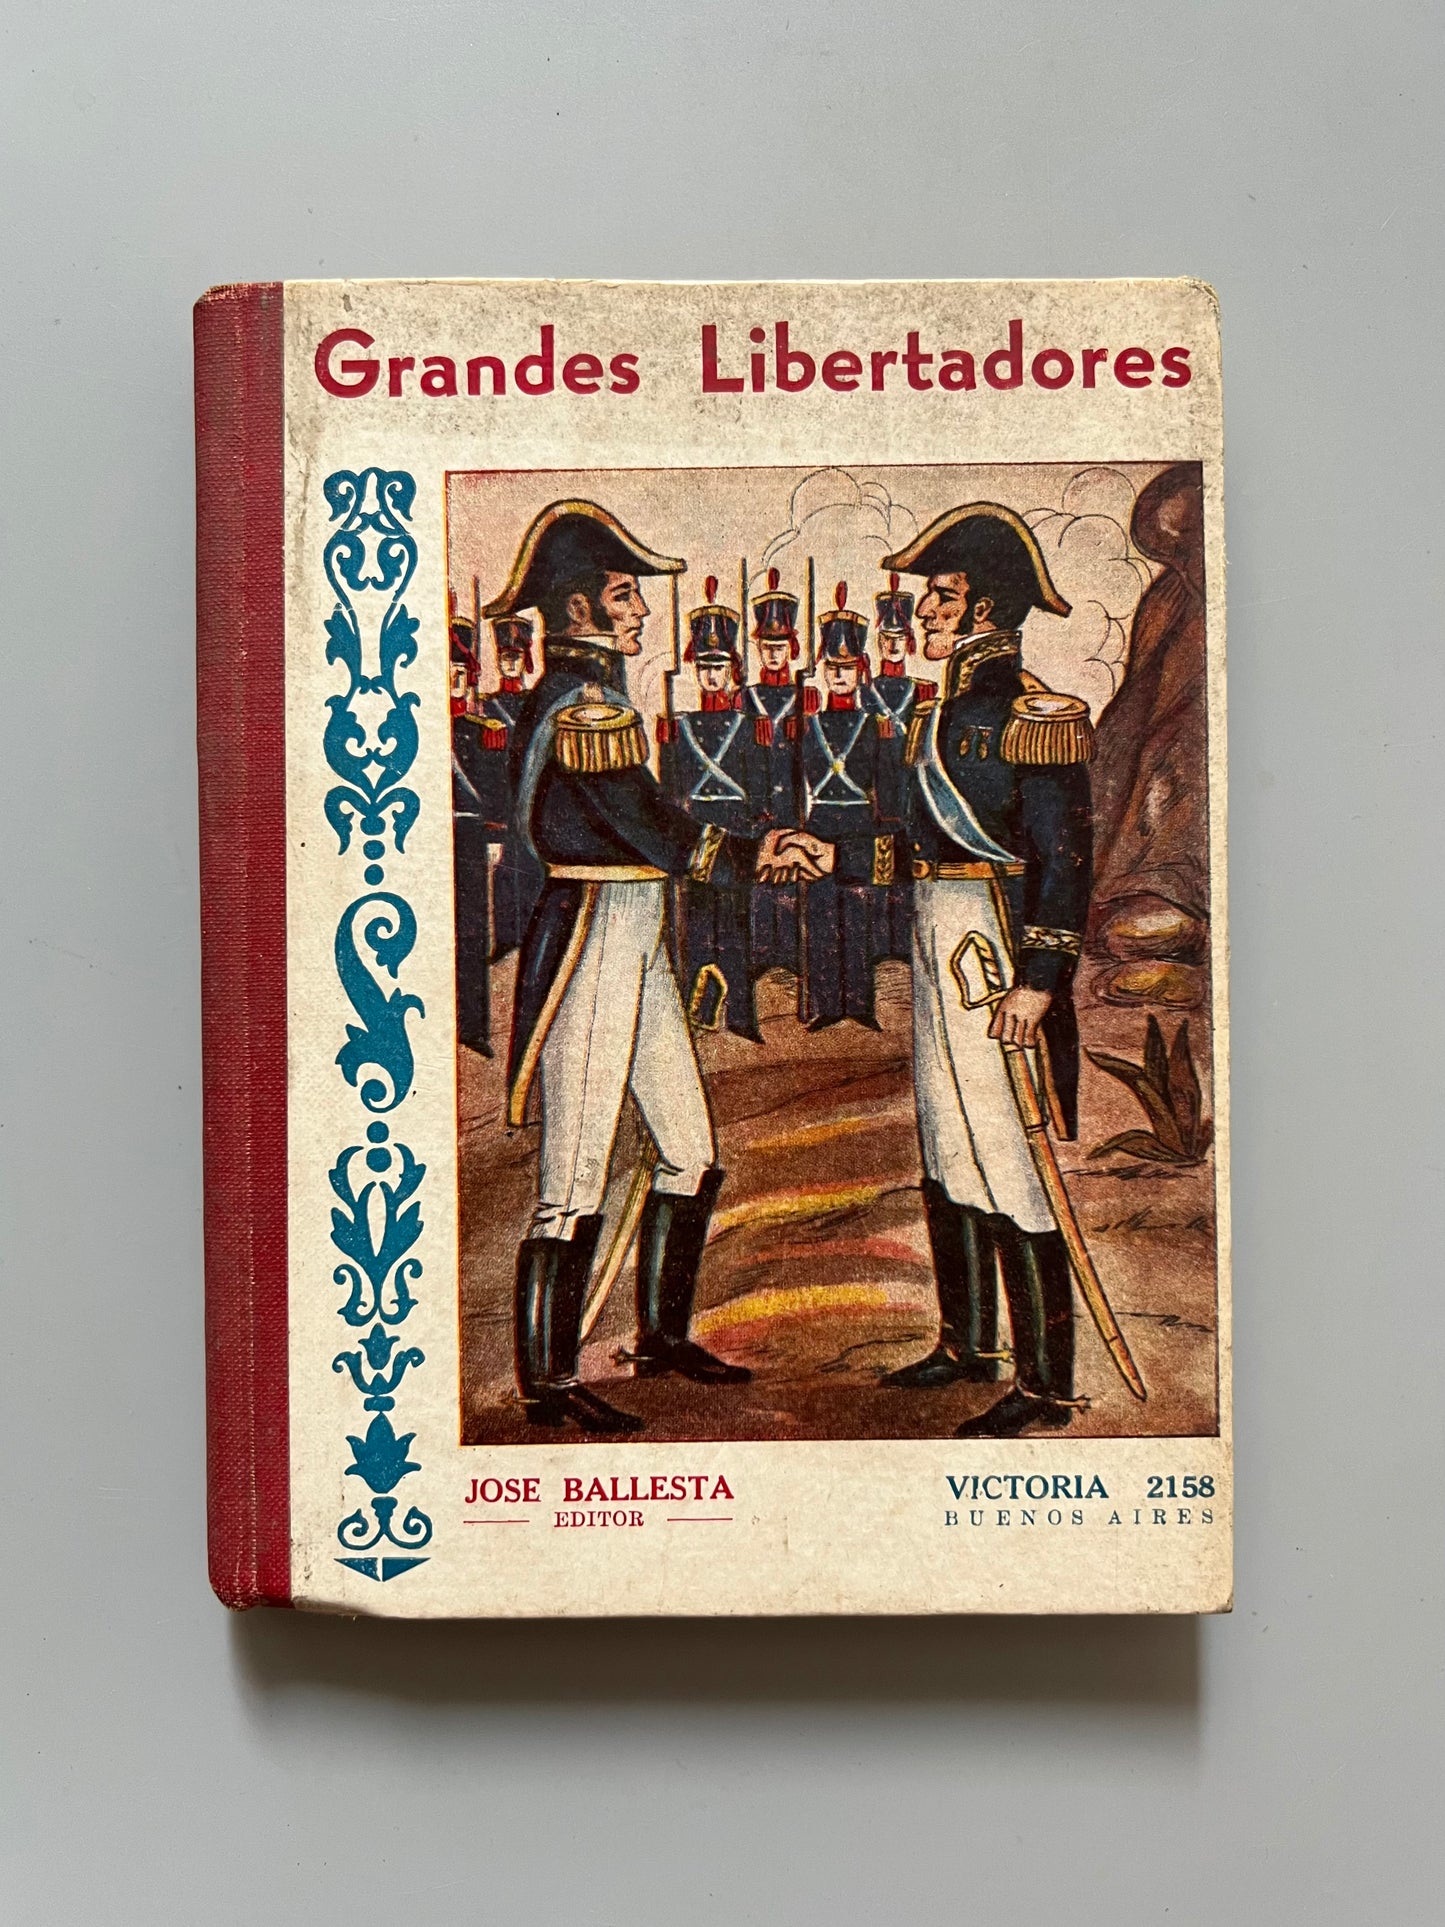 Grandes libertadores, Emilio Perez - Jose Ballesta, ca. 1920